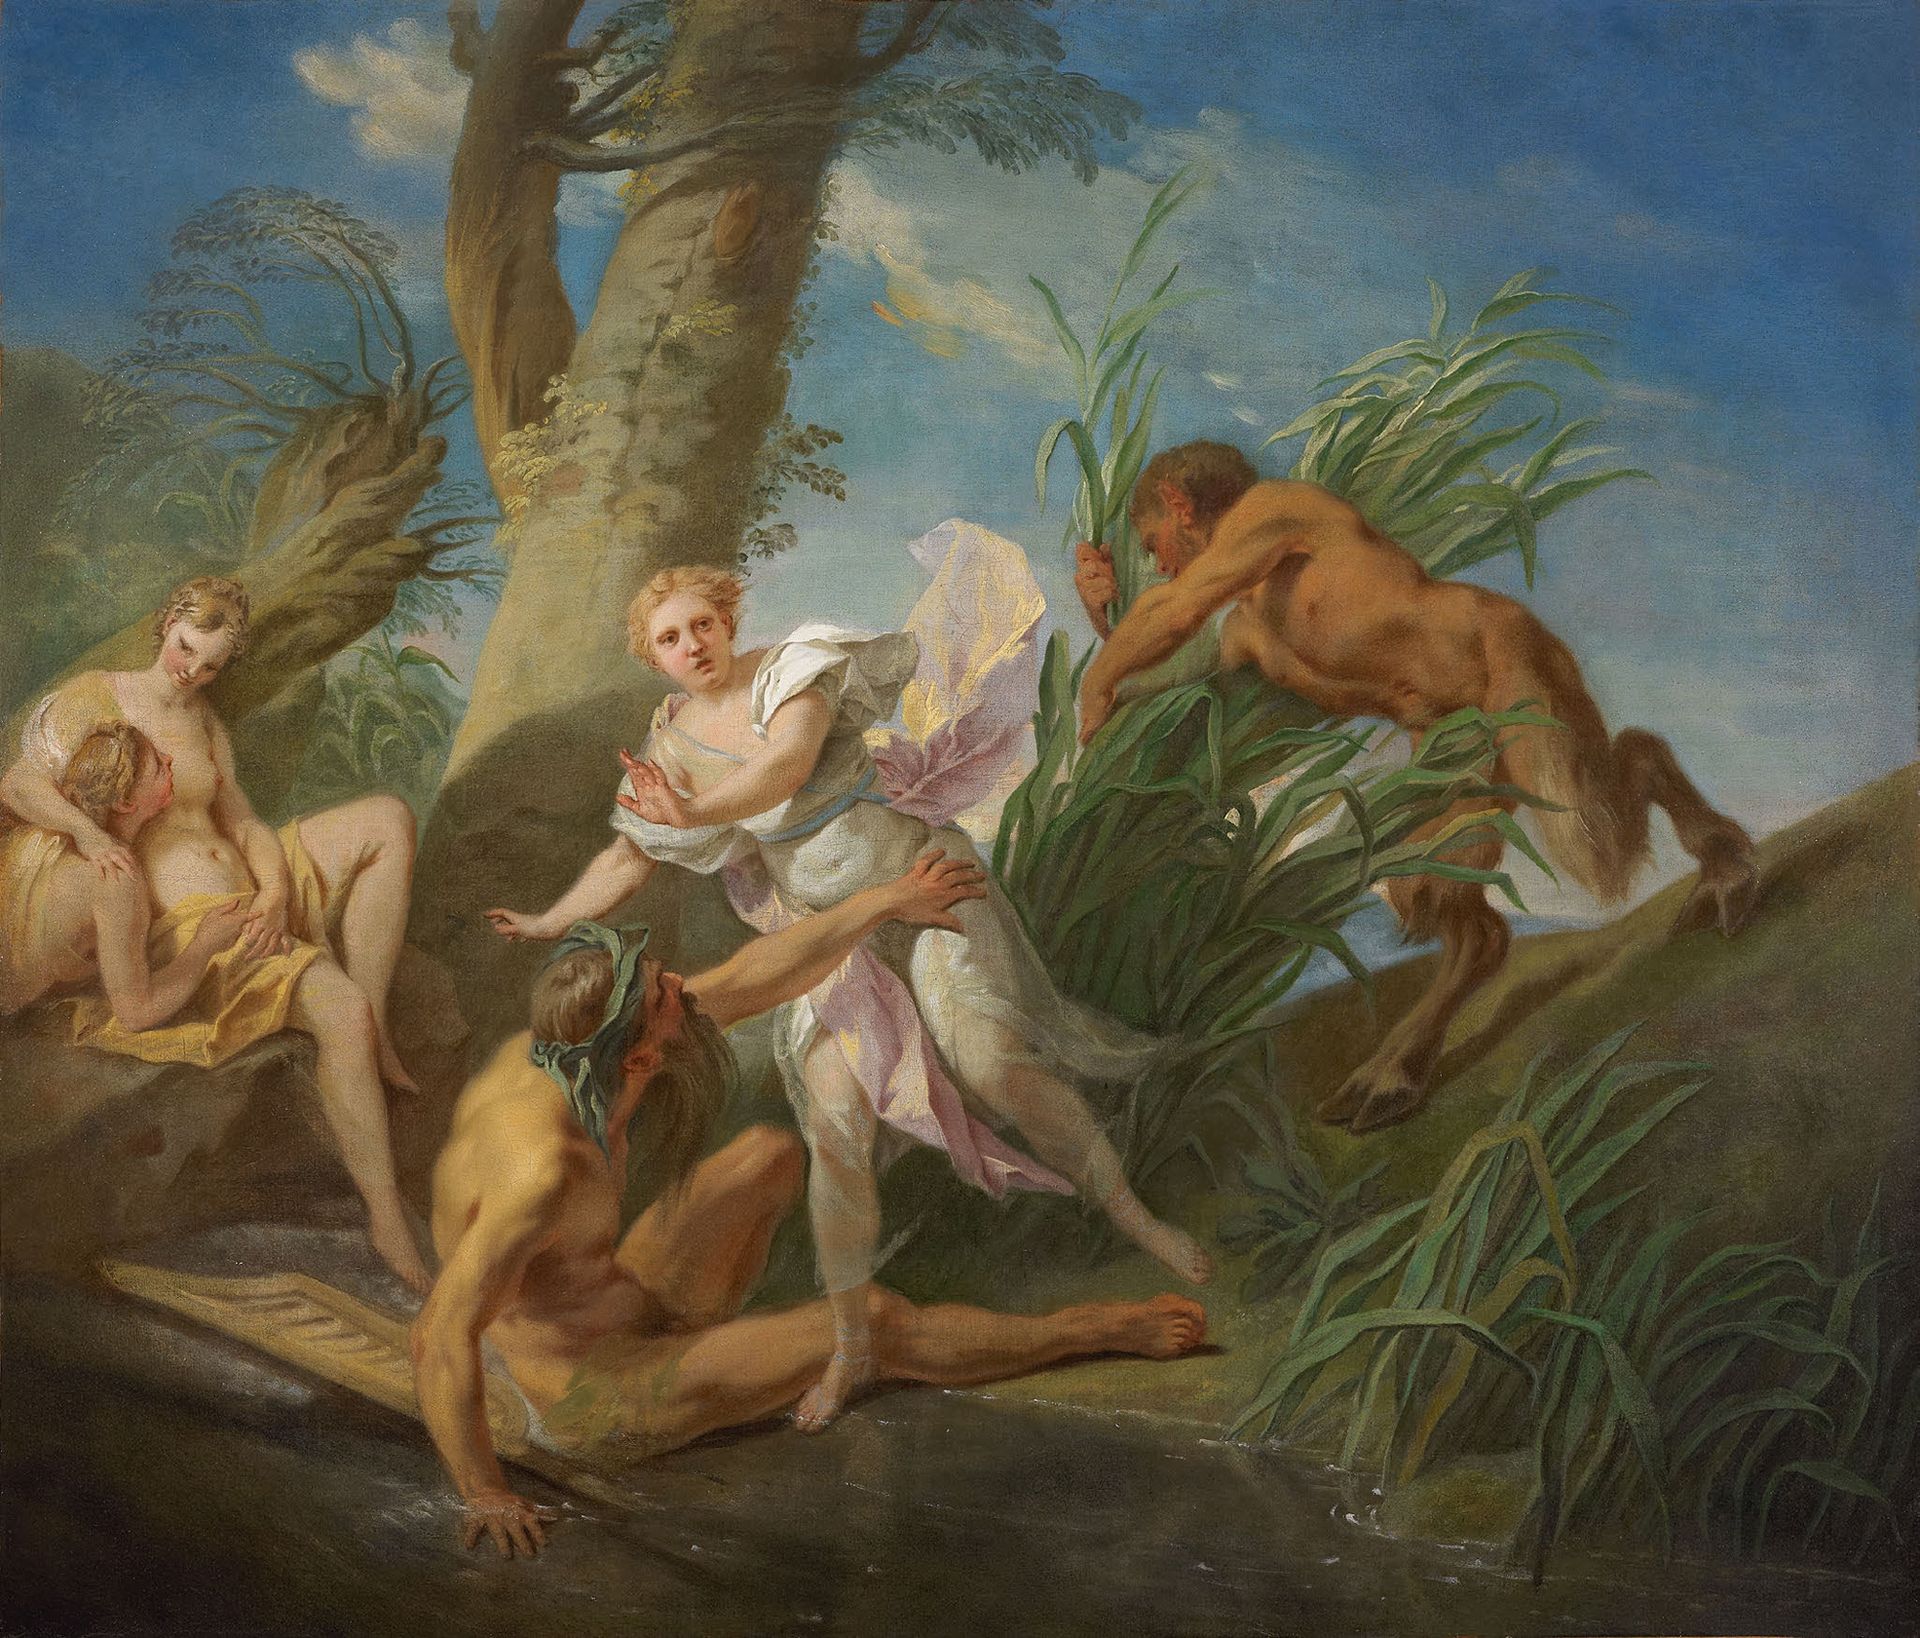 JEAN-BAPTISTE VANLOO AIX-EN-PROVENCE, 1684 - 1745 潘和西林克斯
布面油画
115 x 134 cm

出处 
&hellip;